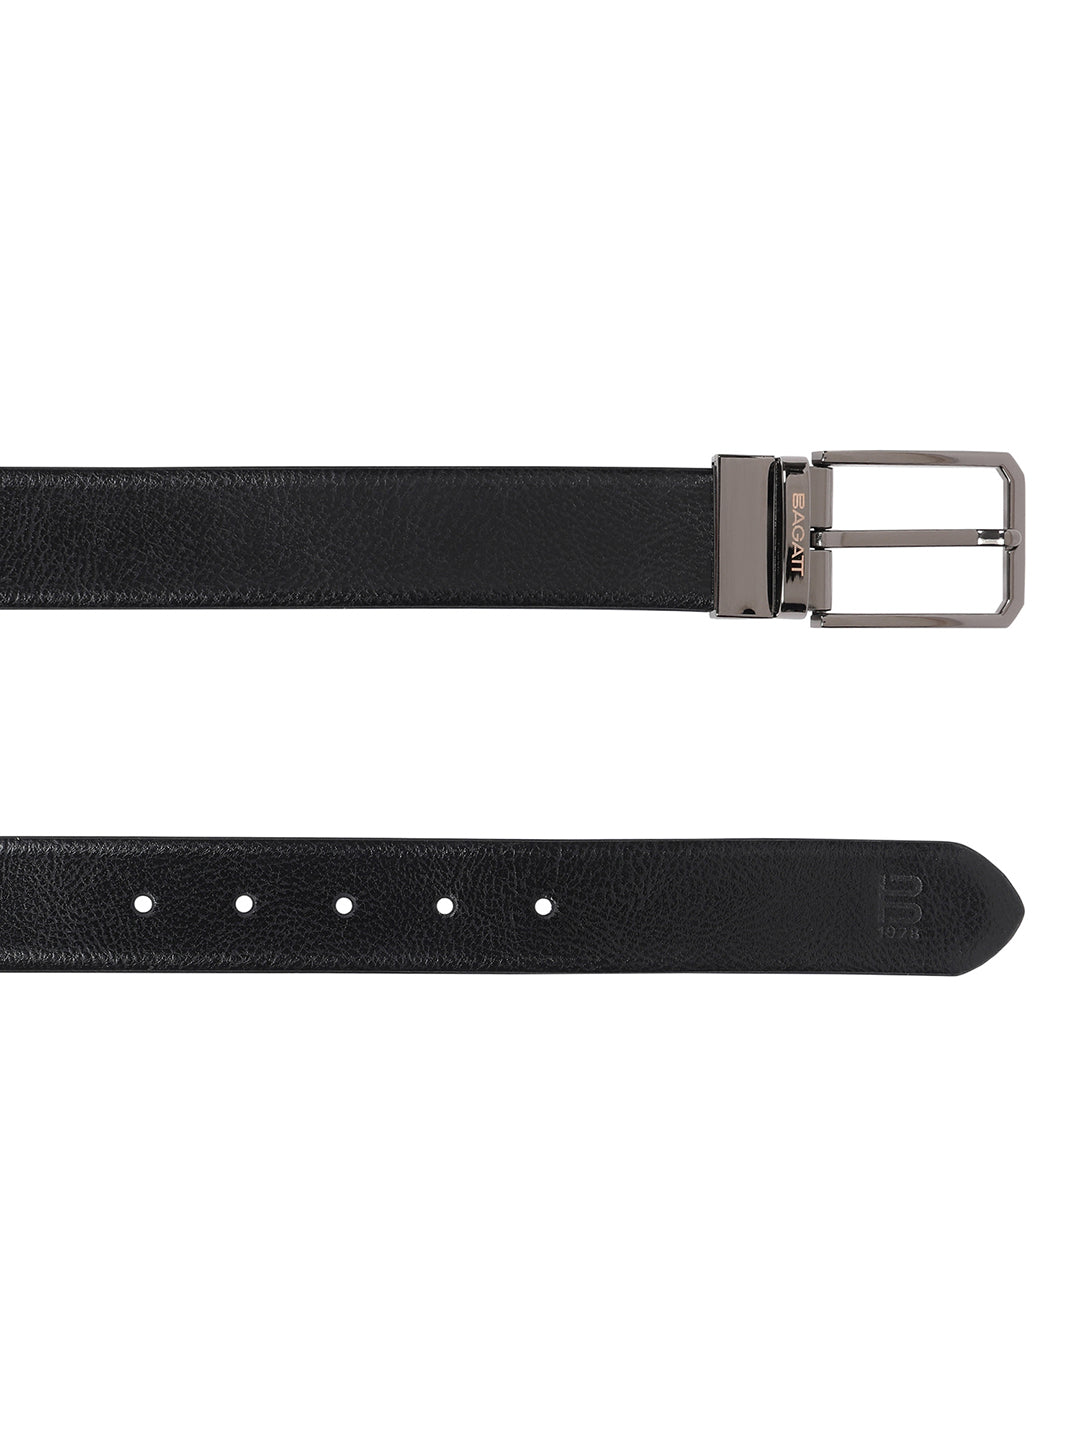 BAGATT Black Reversible Leather Belt